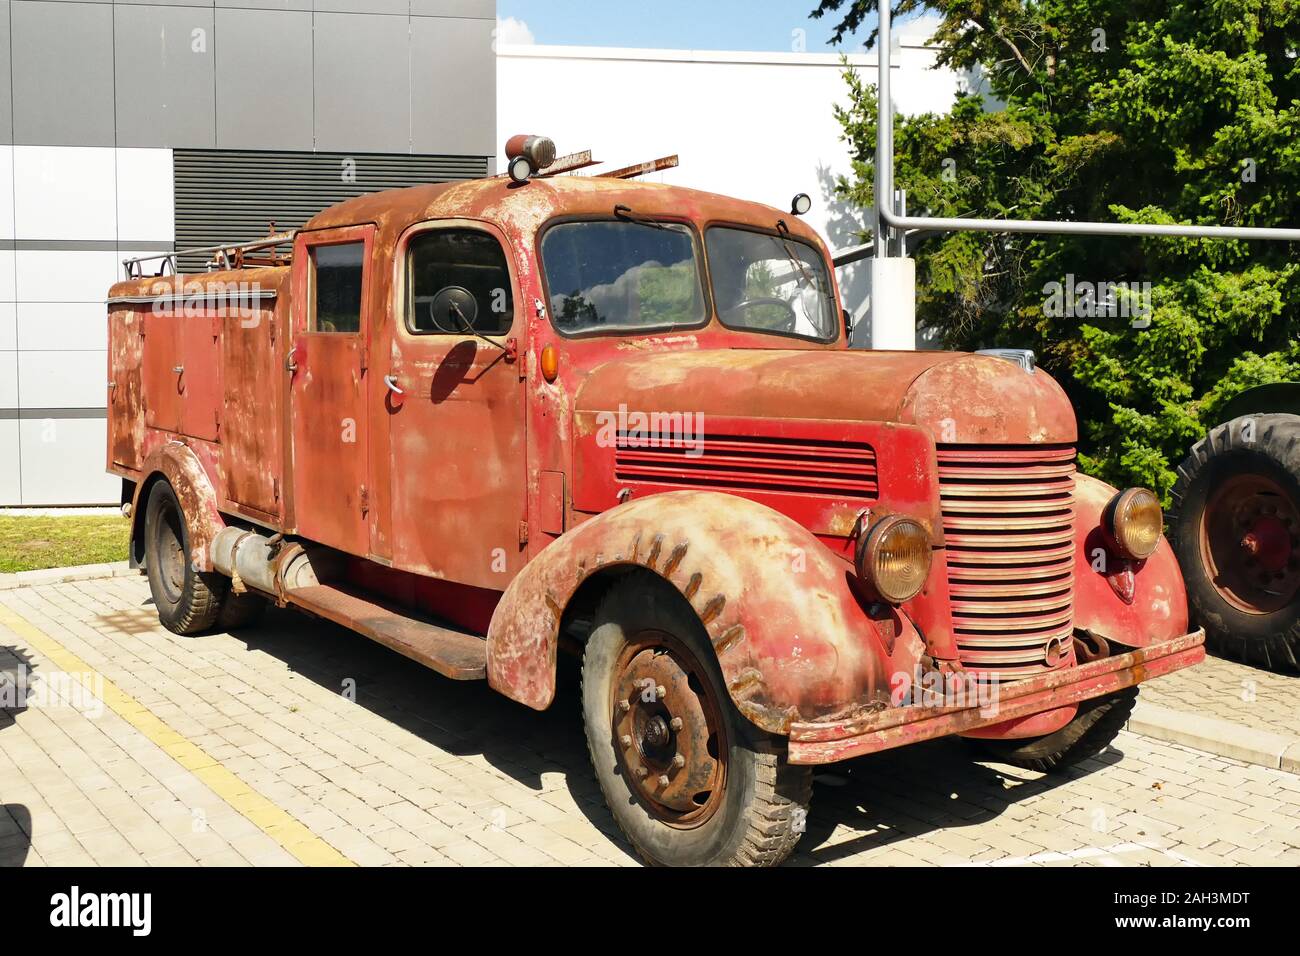 Carro de bomberos antiguo fotografías e imágenes de alta resolución - Alamy